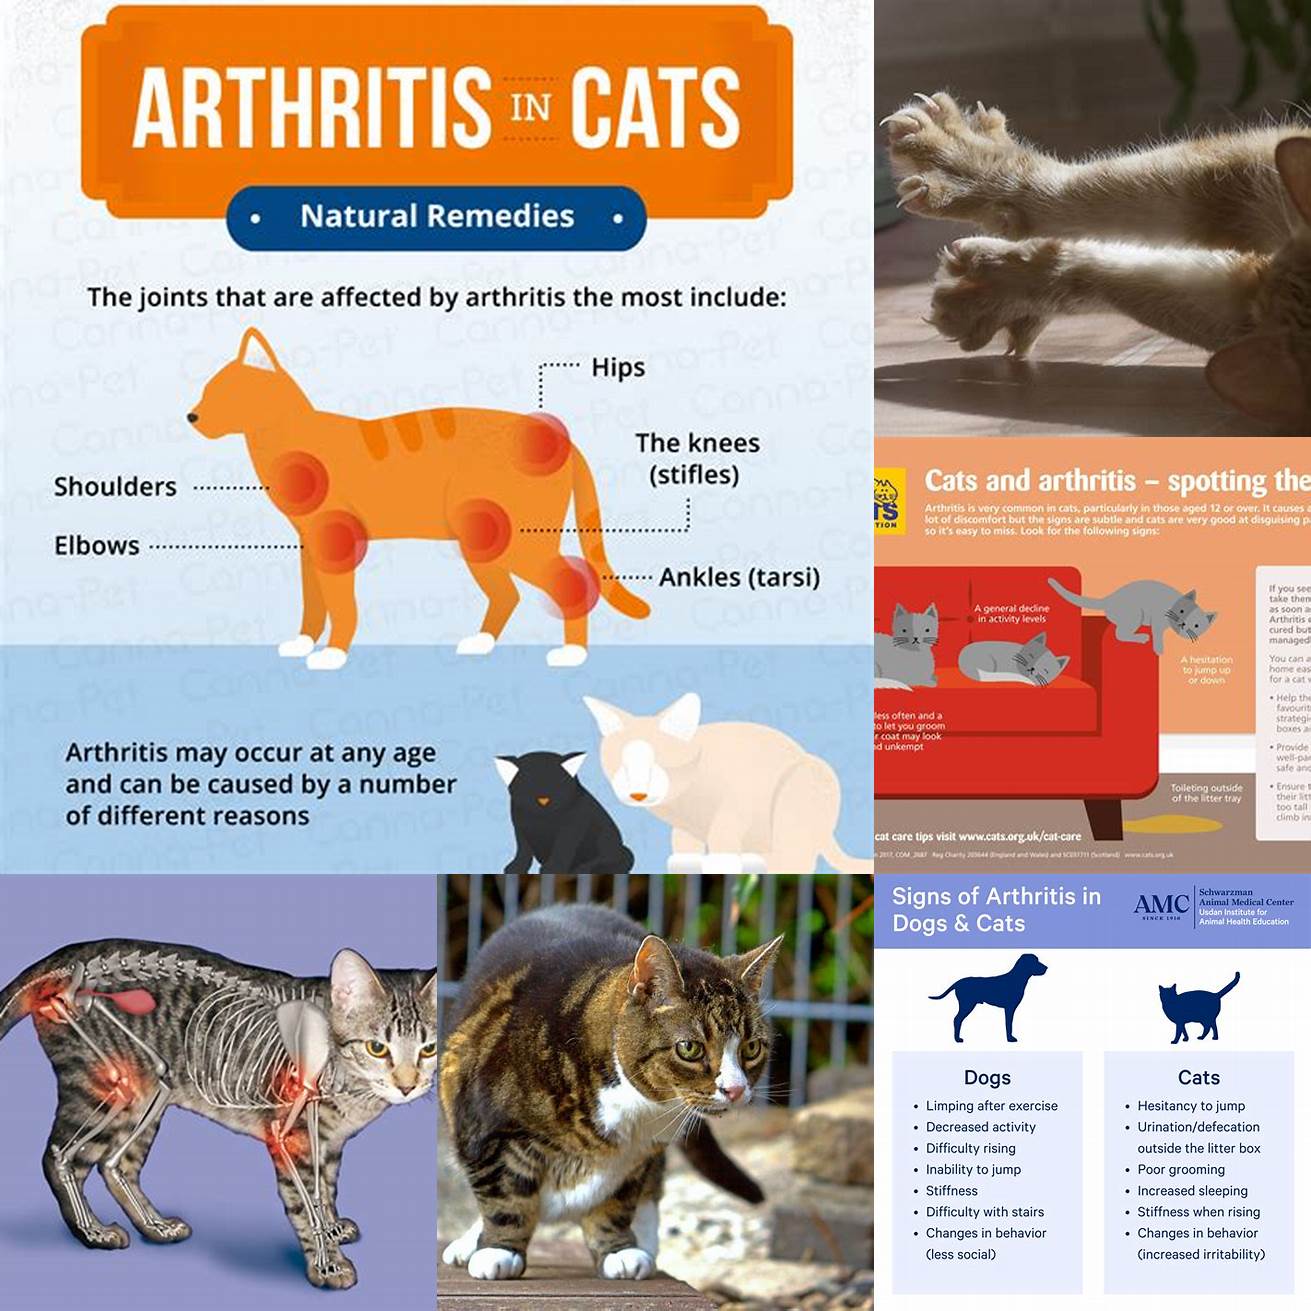 Cat with arthritis